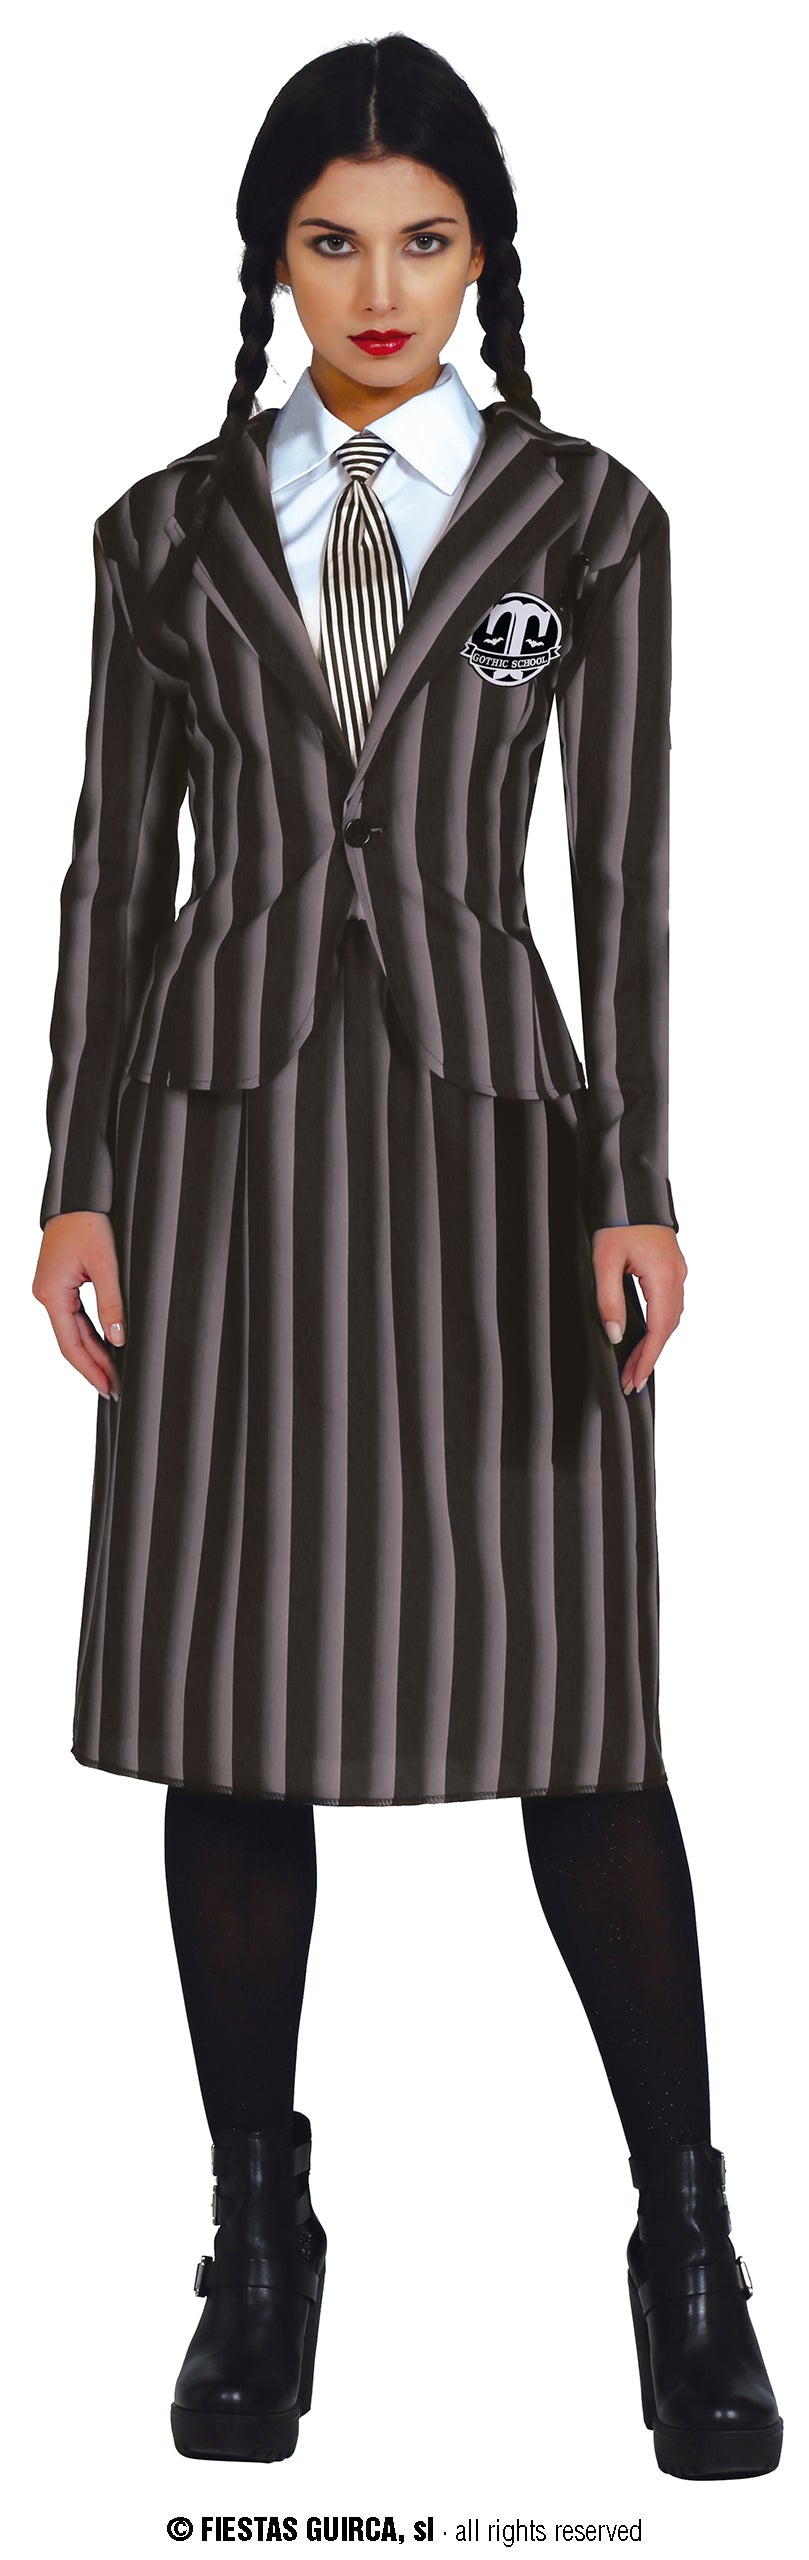 Wednesday Gothic Student Uniform Woman